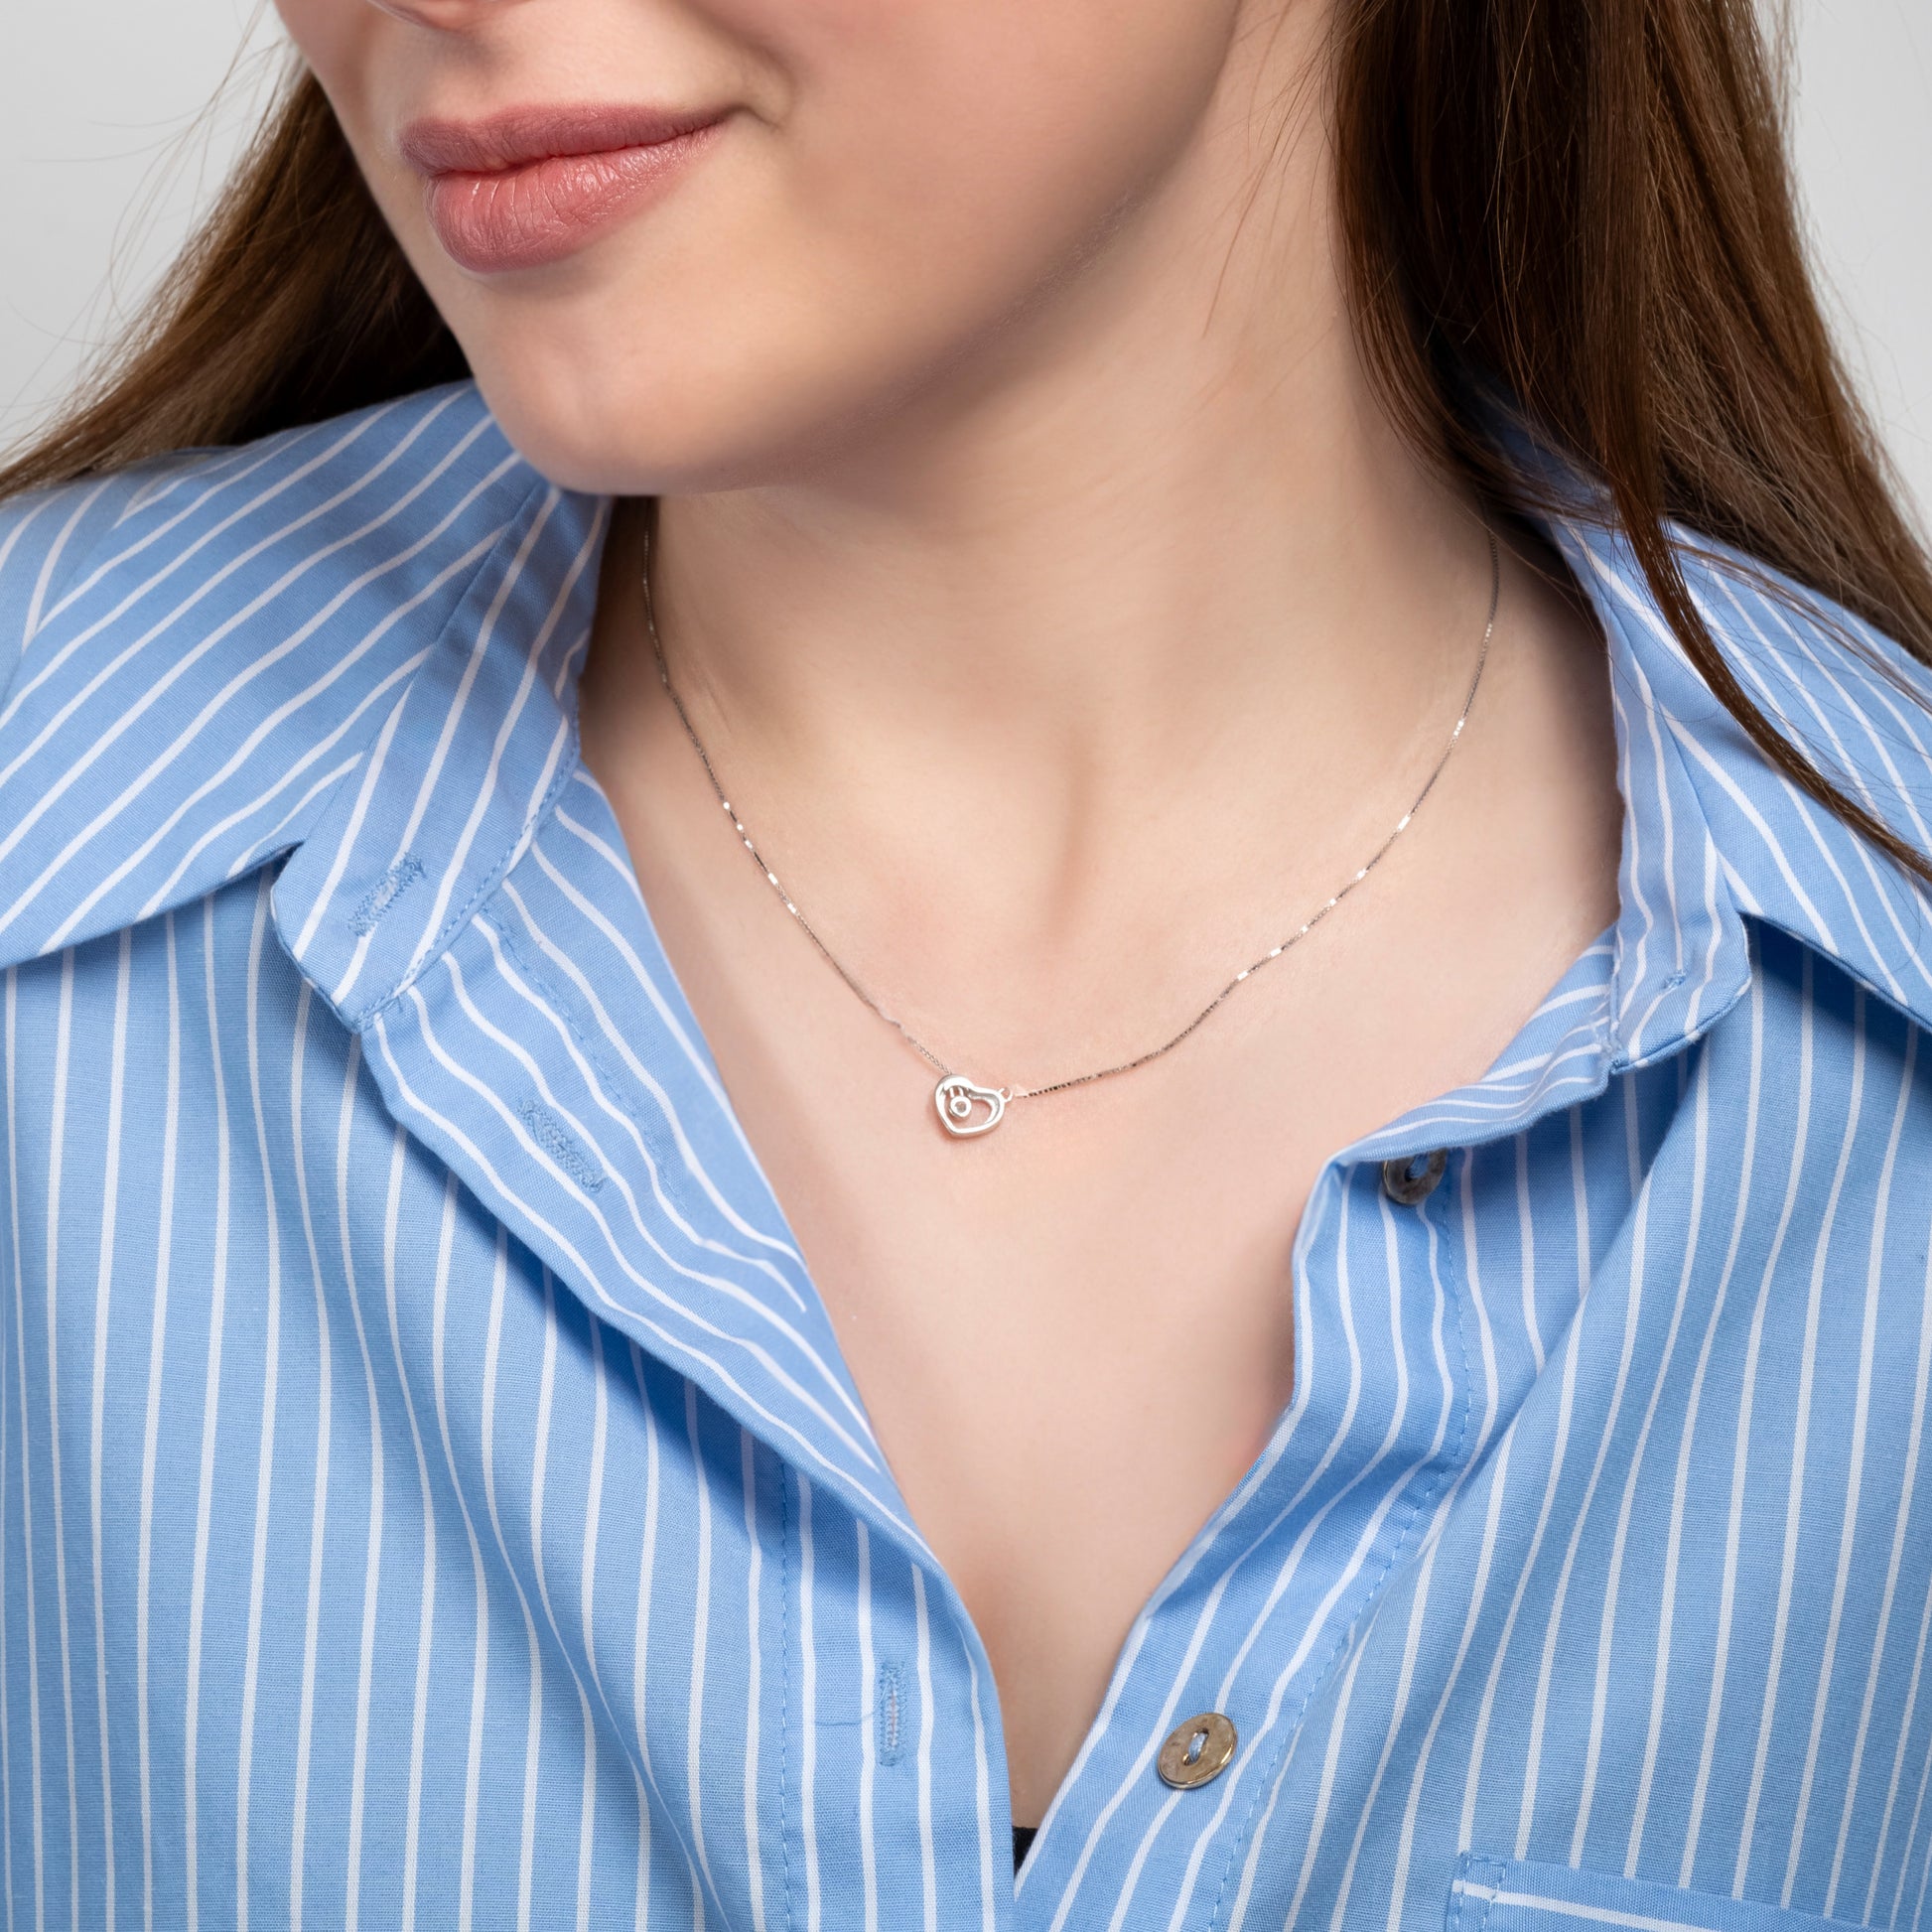 A model in a blue shirt wearing Heart Shape Silver Necklace